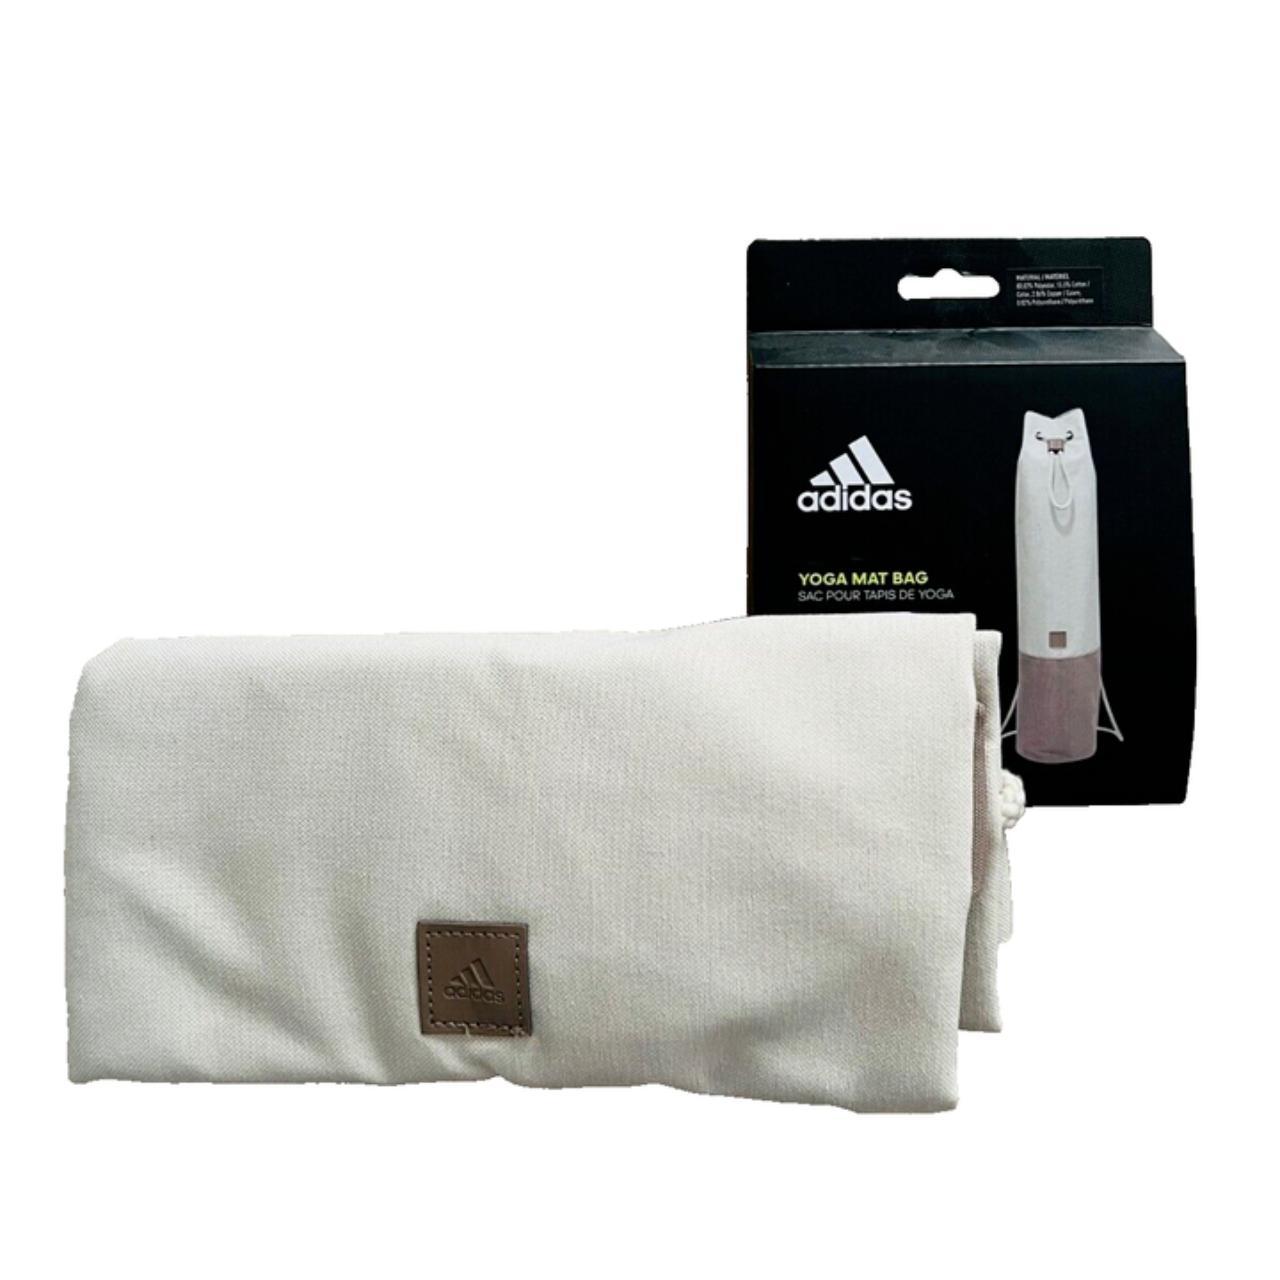 Adidas GC5982 Yoga Mat Bag Cream, Head to your